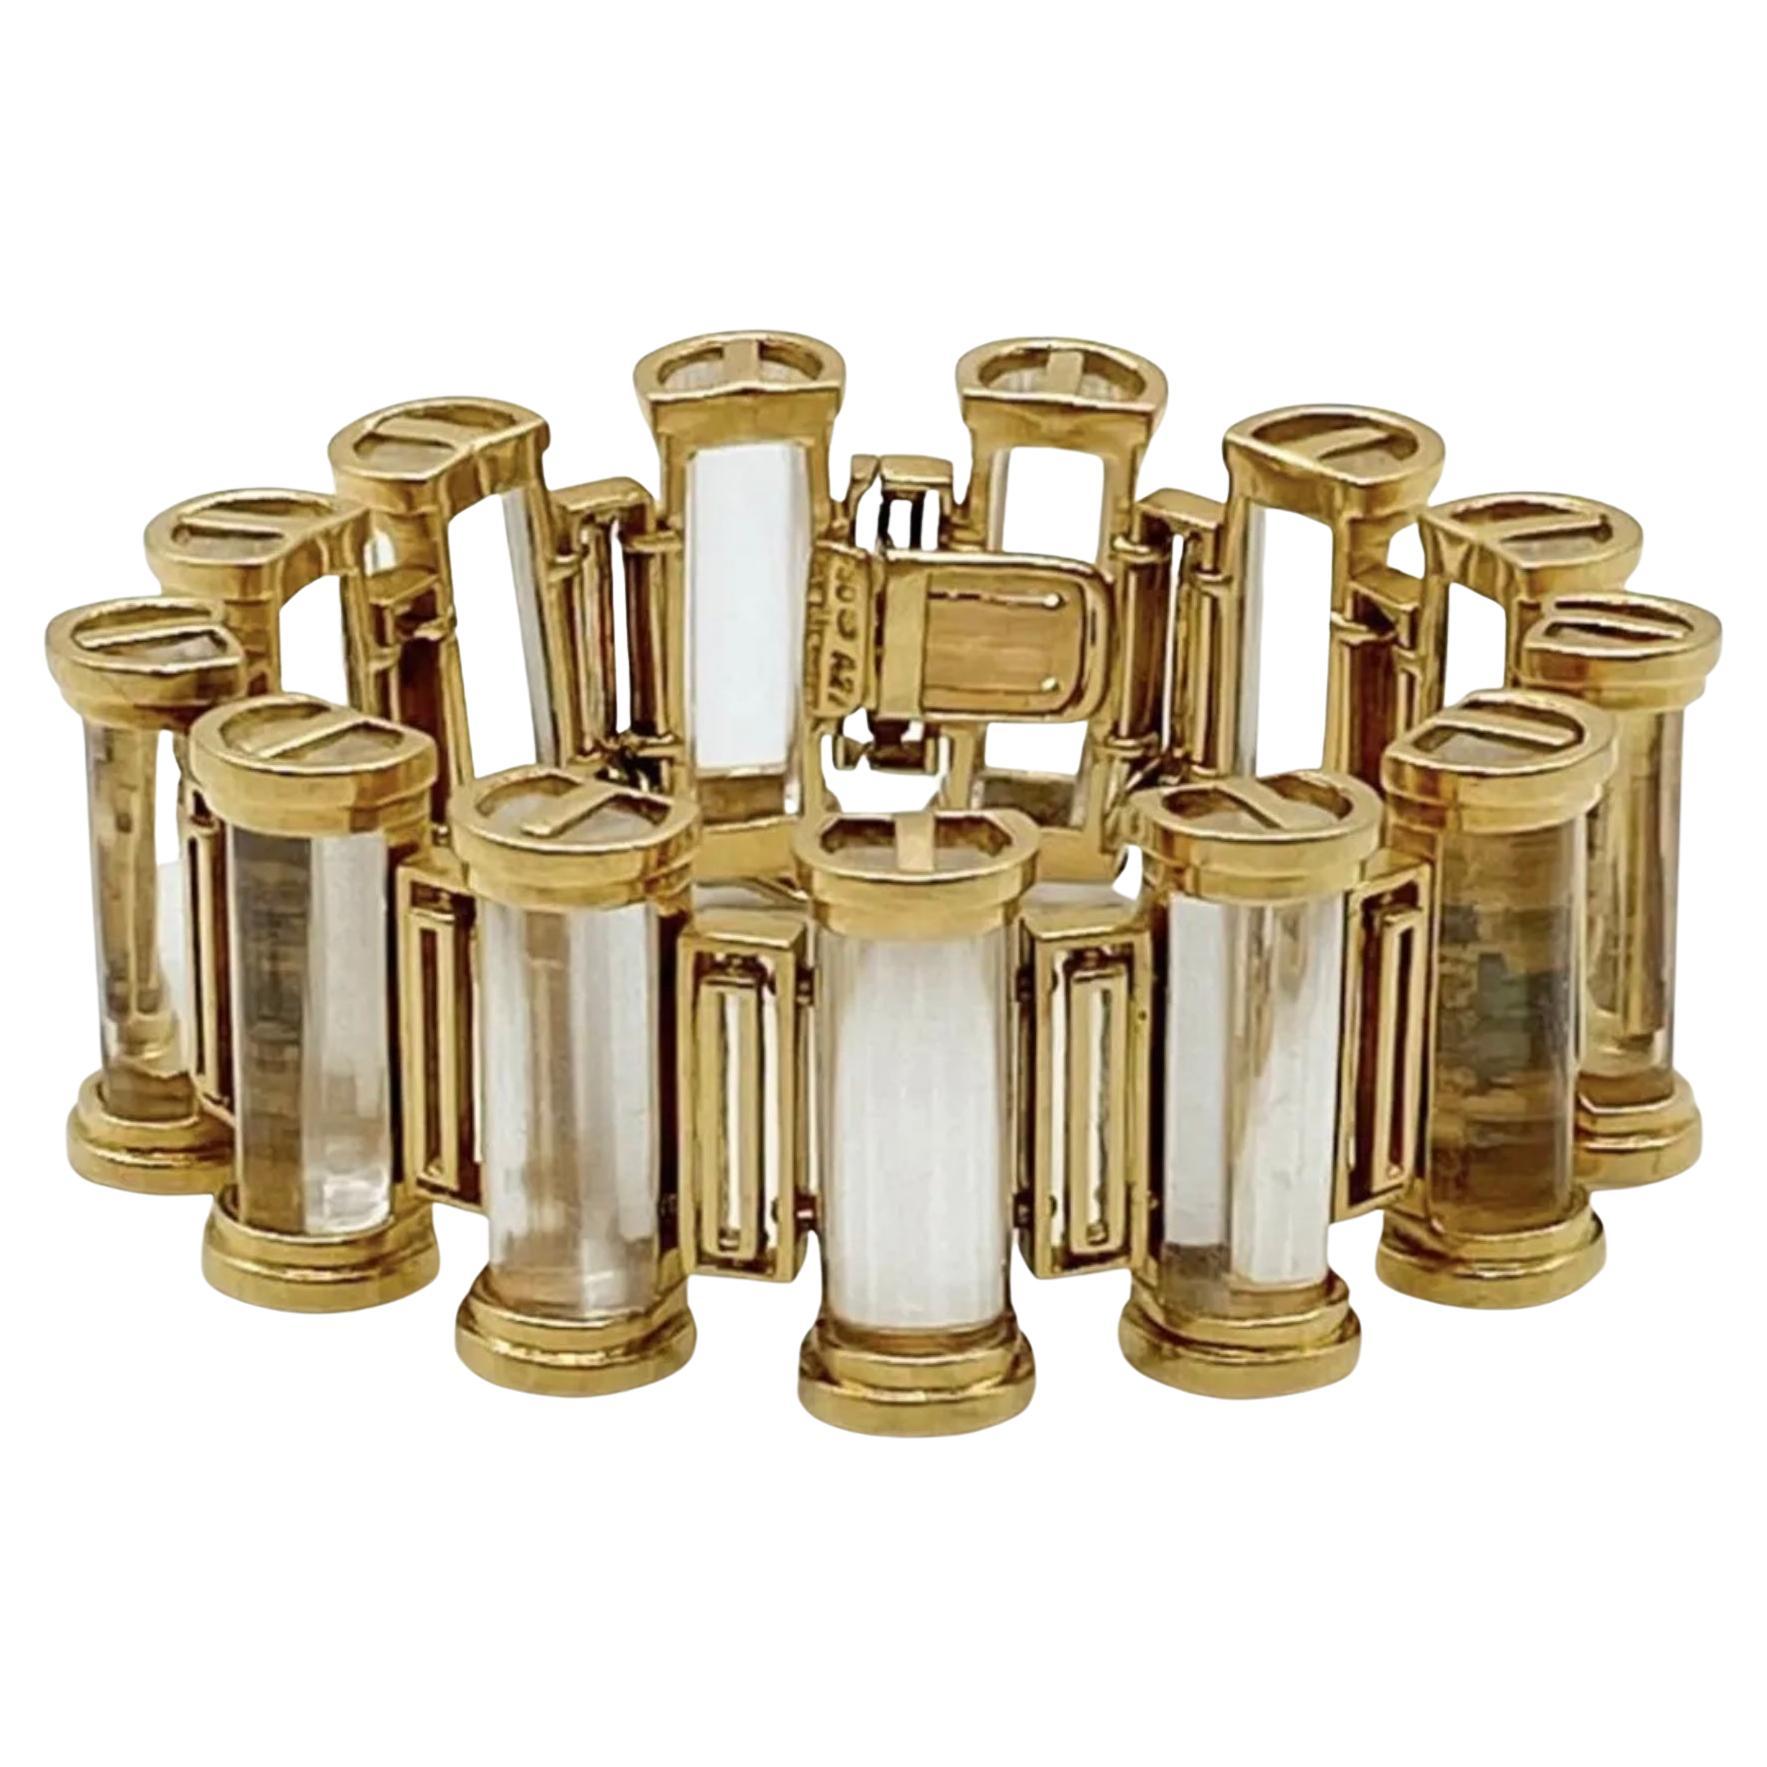 Spectacular Designer Lalaounis 18k Gold Bracelet With 13 Clear Quartz Columns